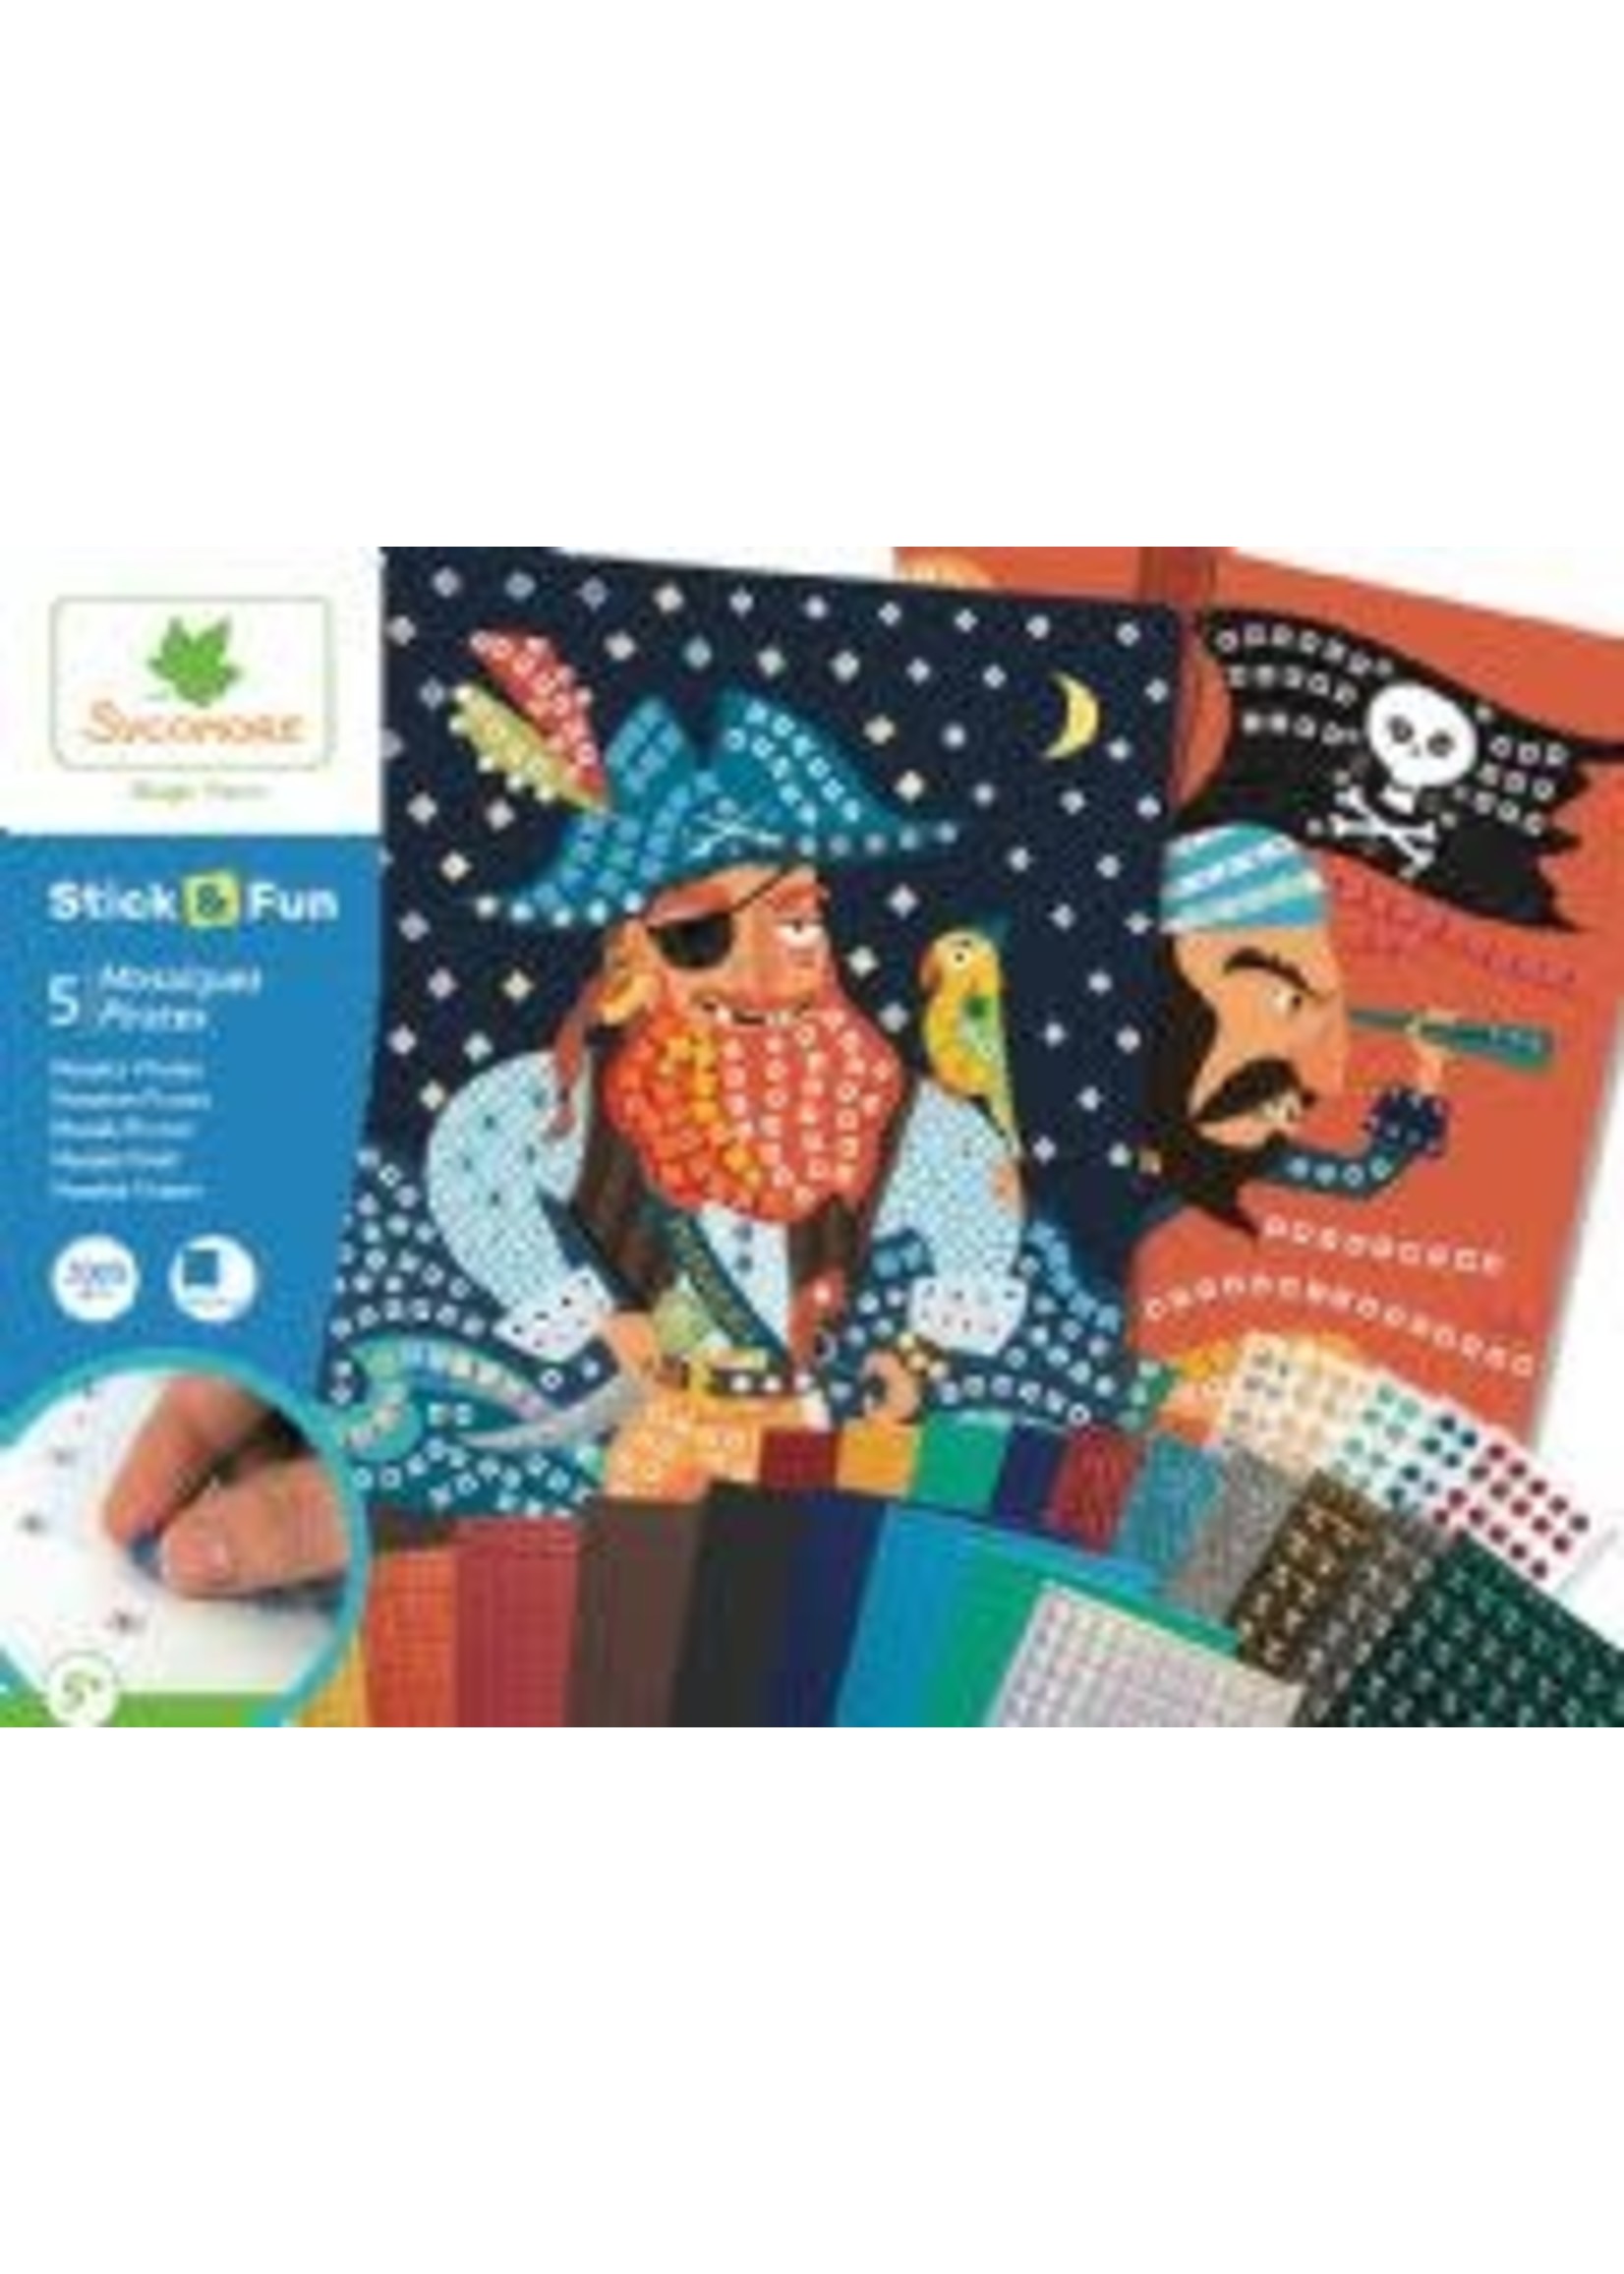 Sycomore Stick & fun - Mosaics - Pirates